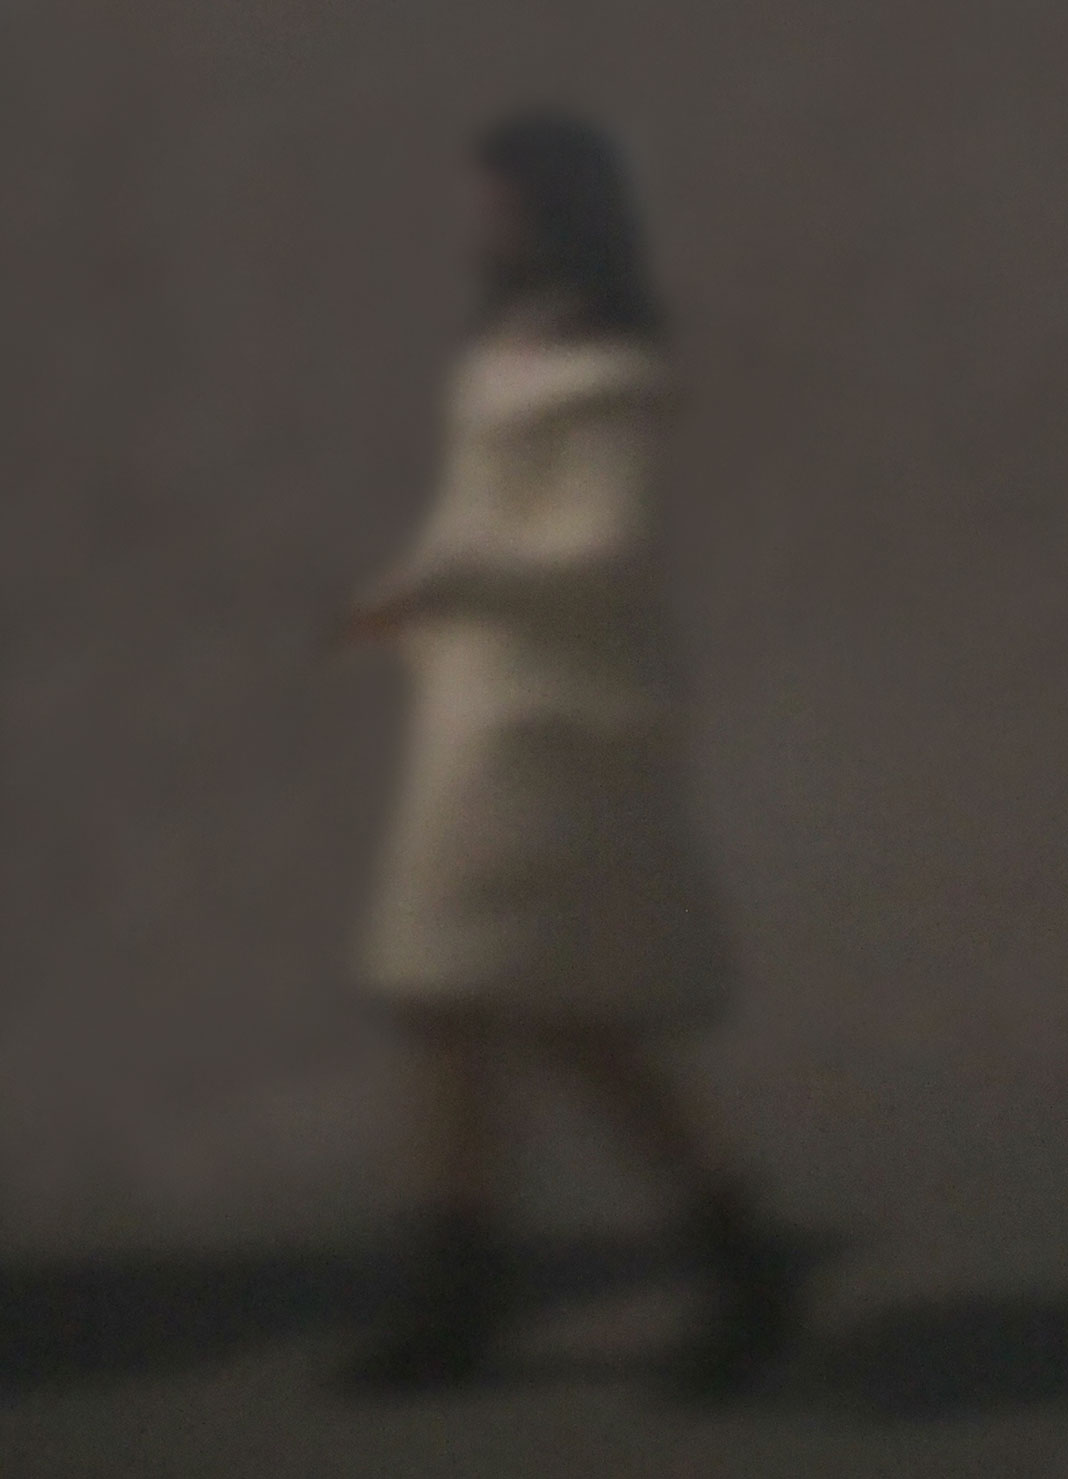 13 „Beiger Mantel“, 2018, Paris, Camera Obscura, Pigmentdruck auf Alu-Dibond